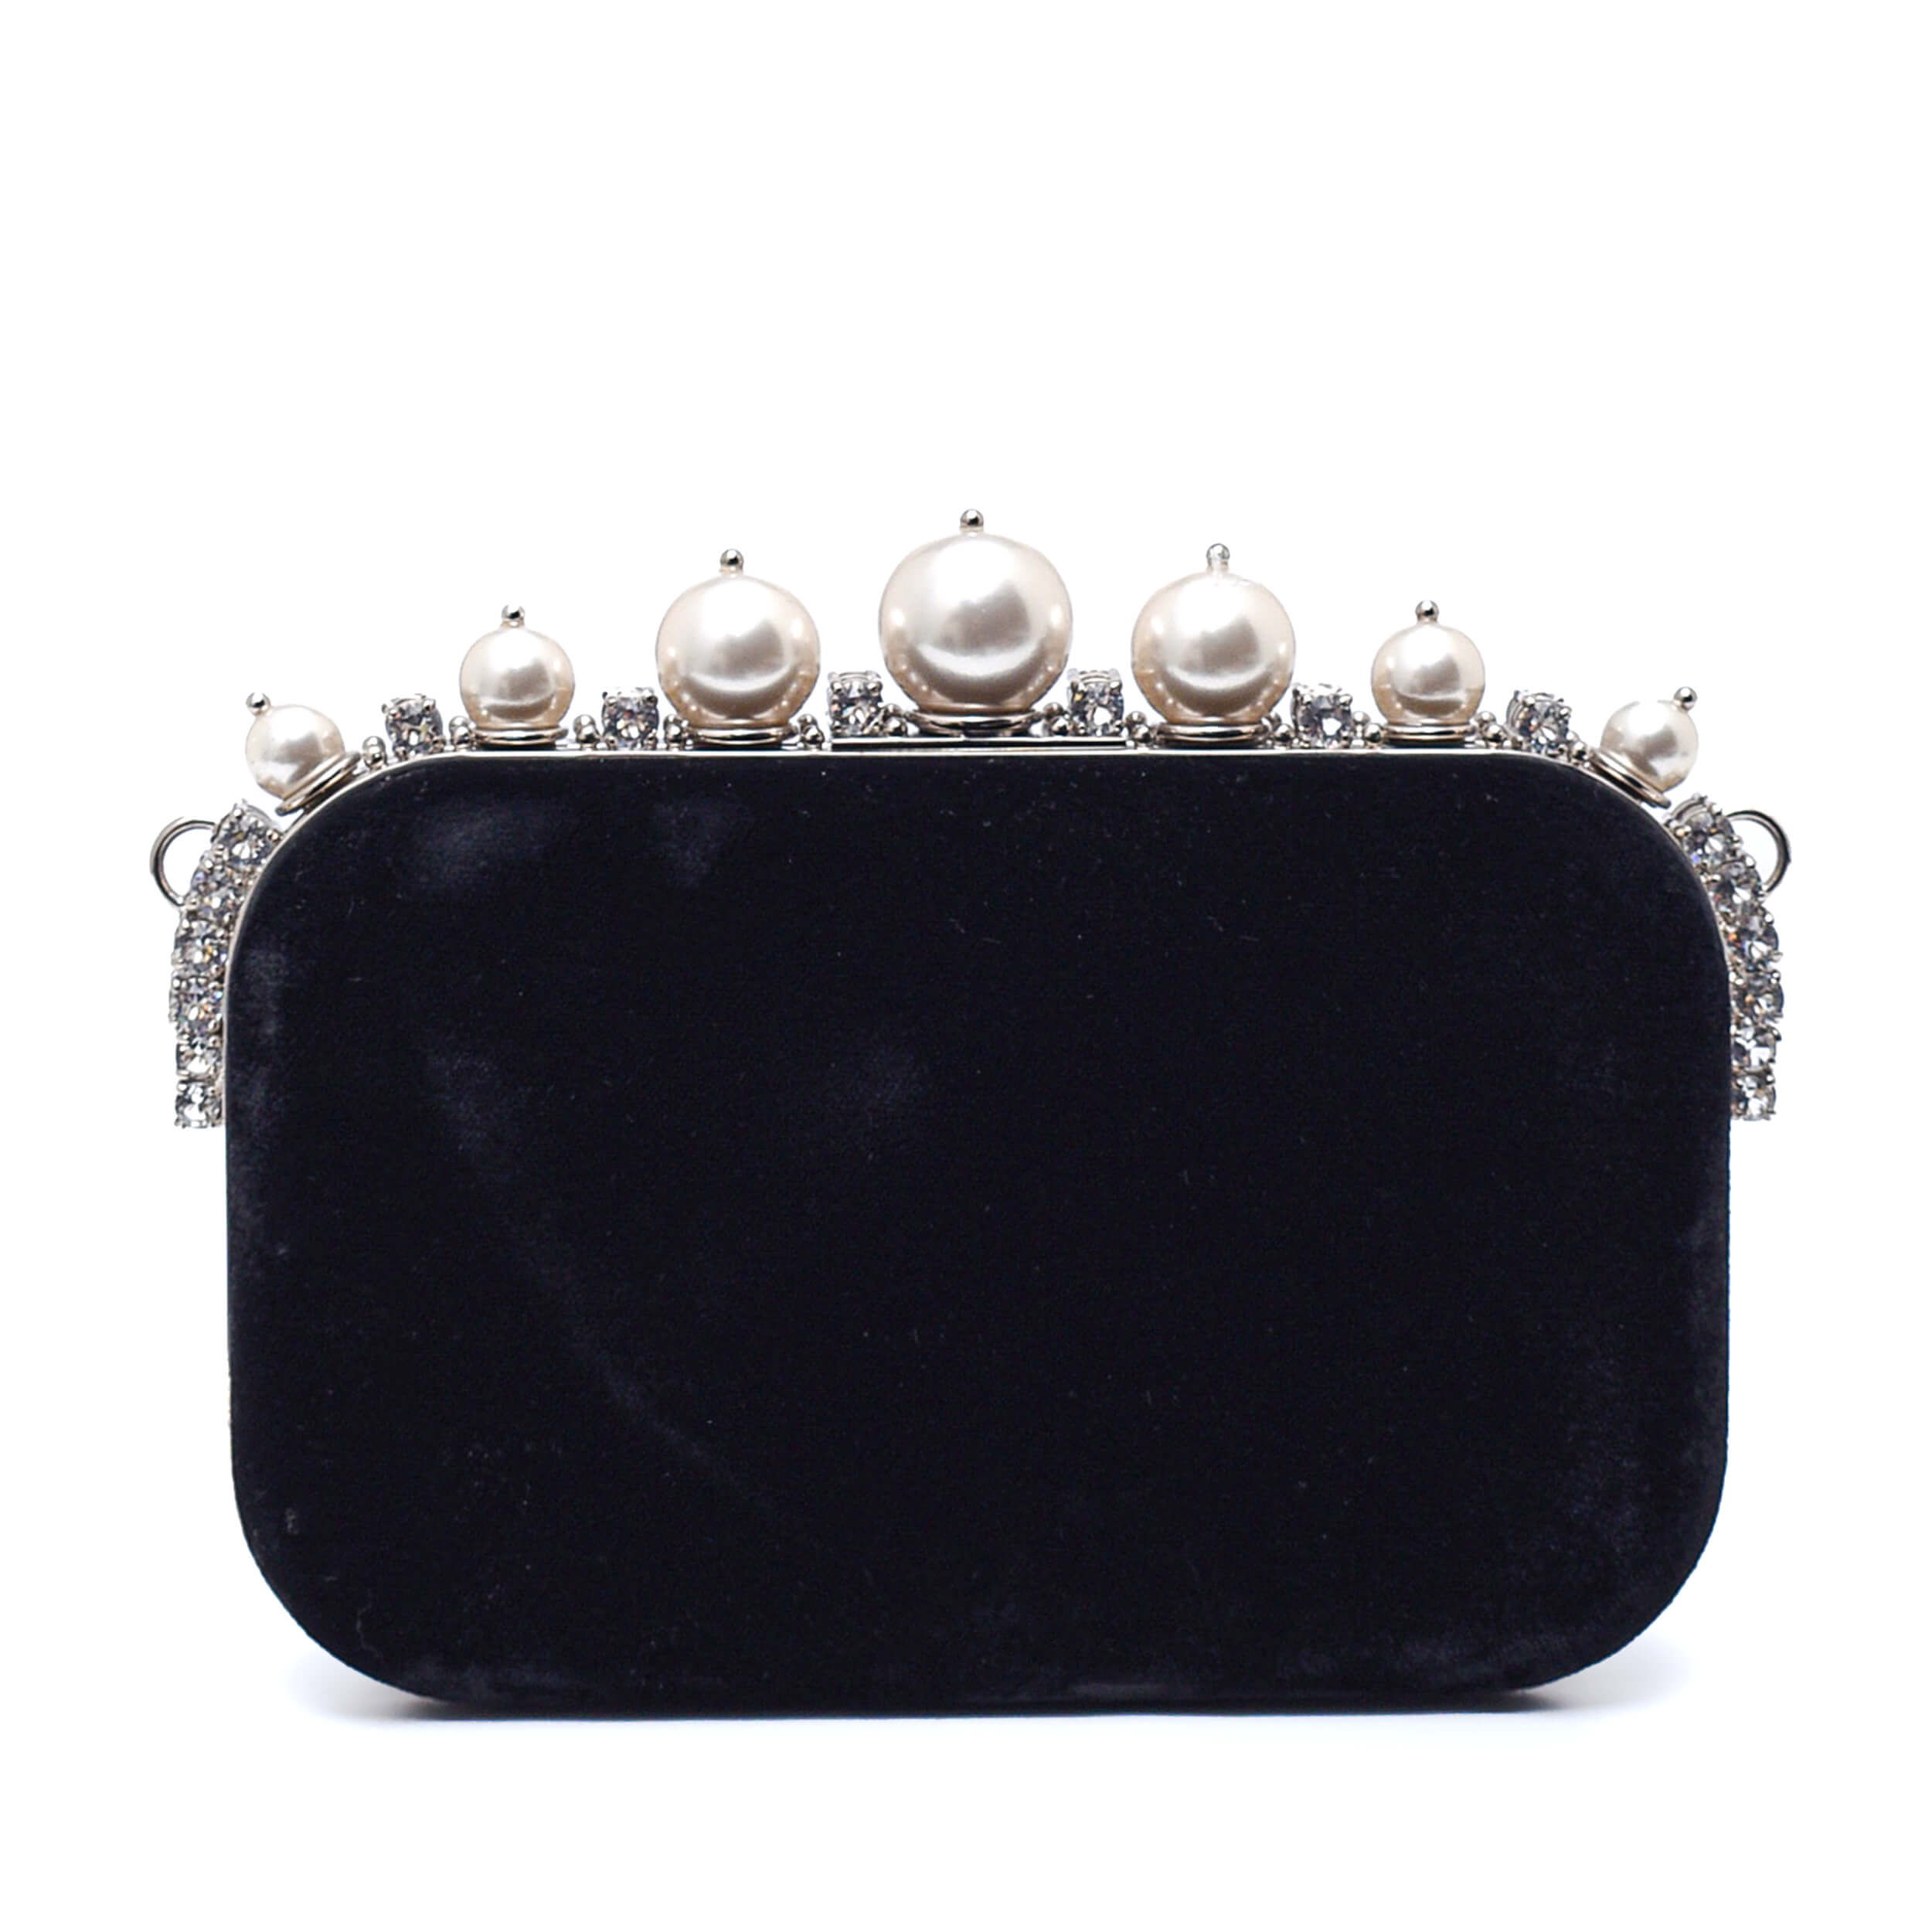 Miu Miu - Black Velvet Pearl and Crystal Embellished Clutch